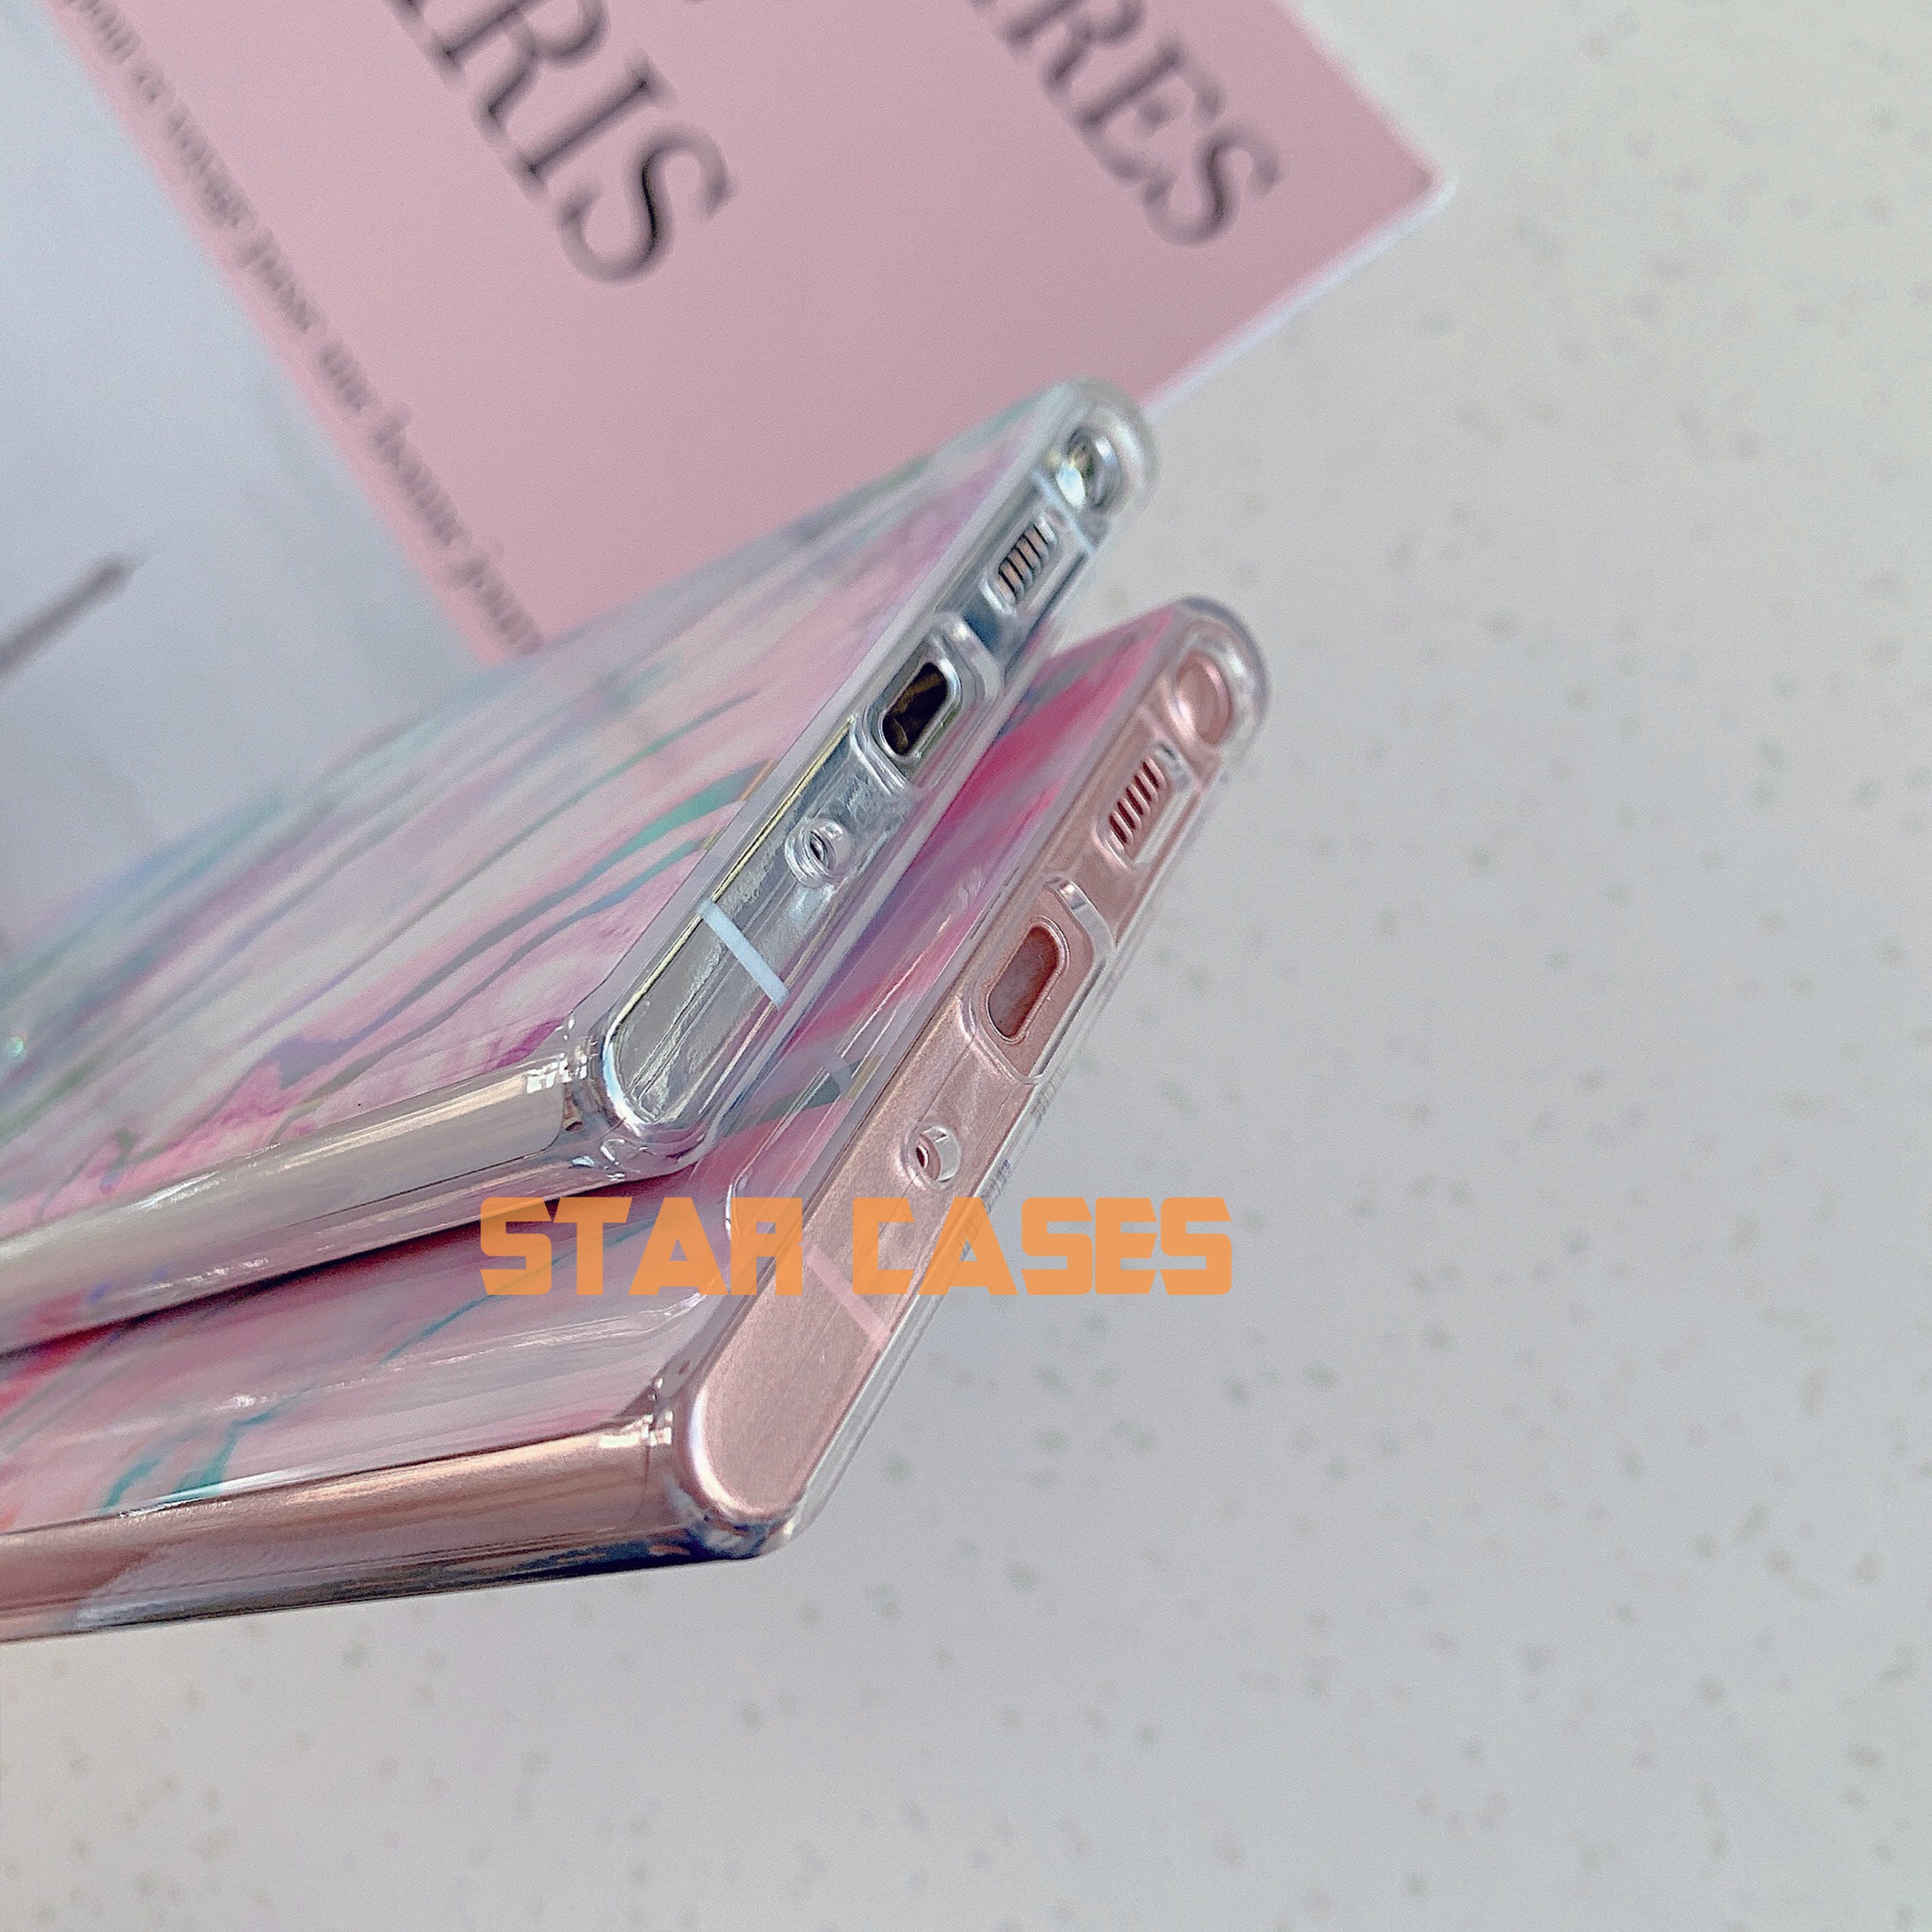 Samsung S10 Plus Laser Marble Soft Case